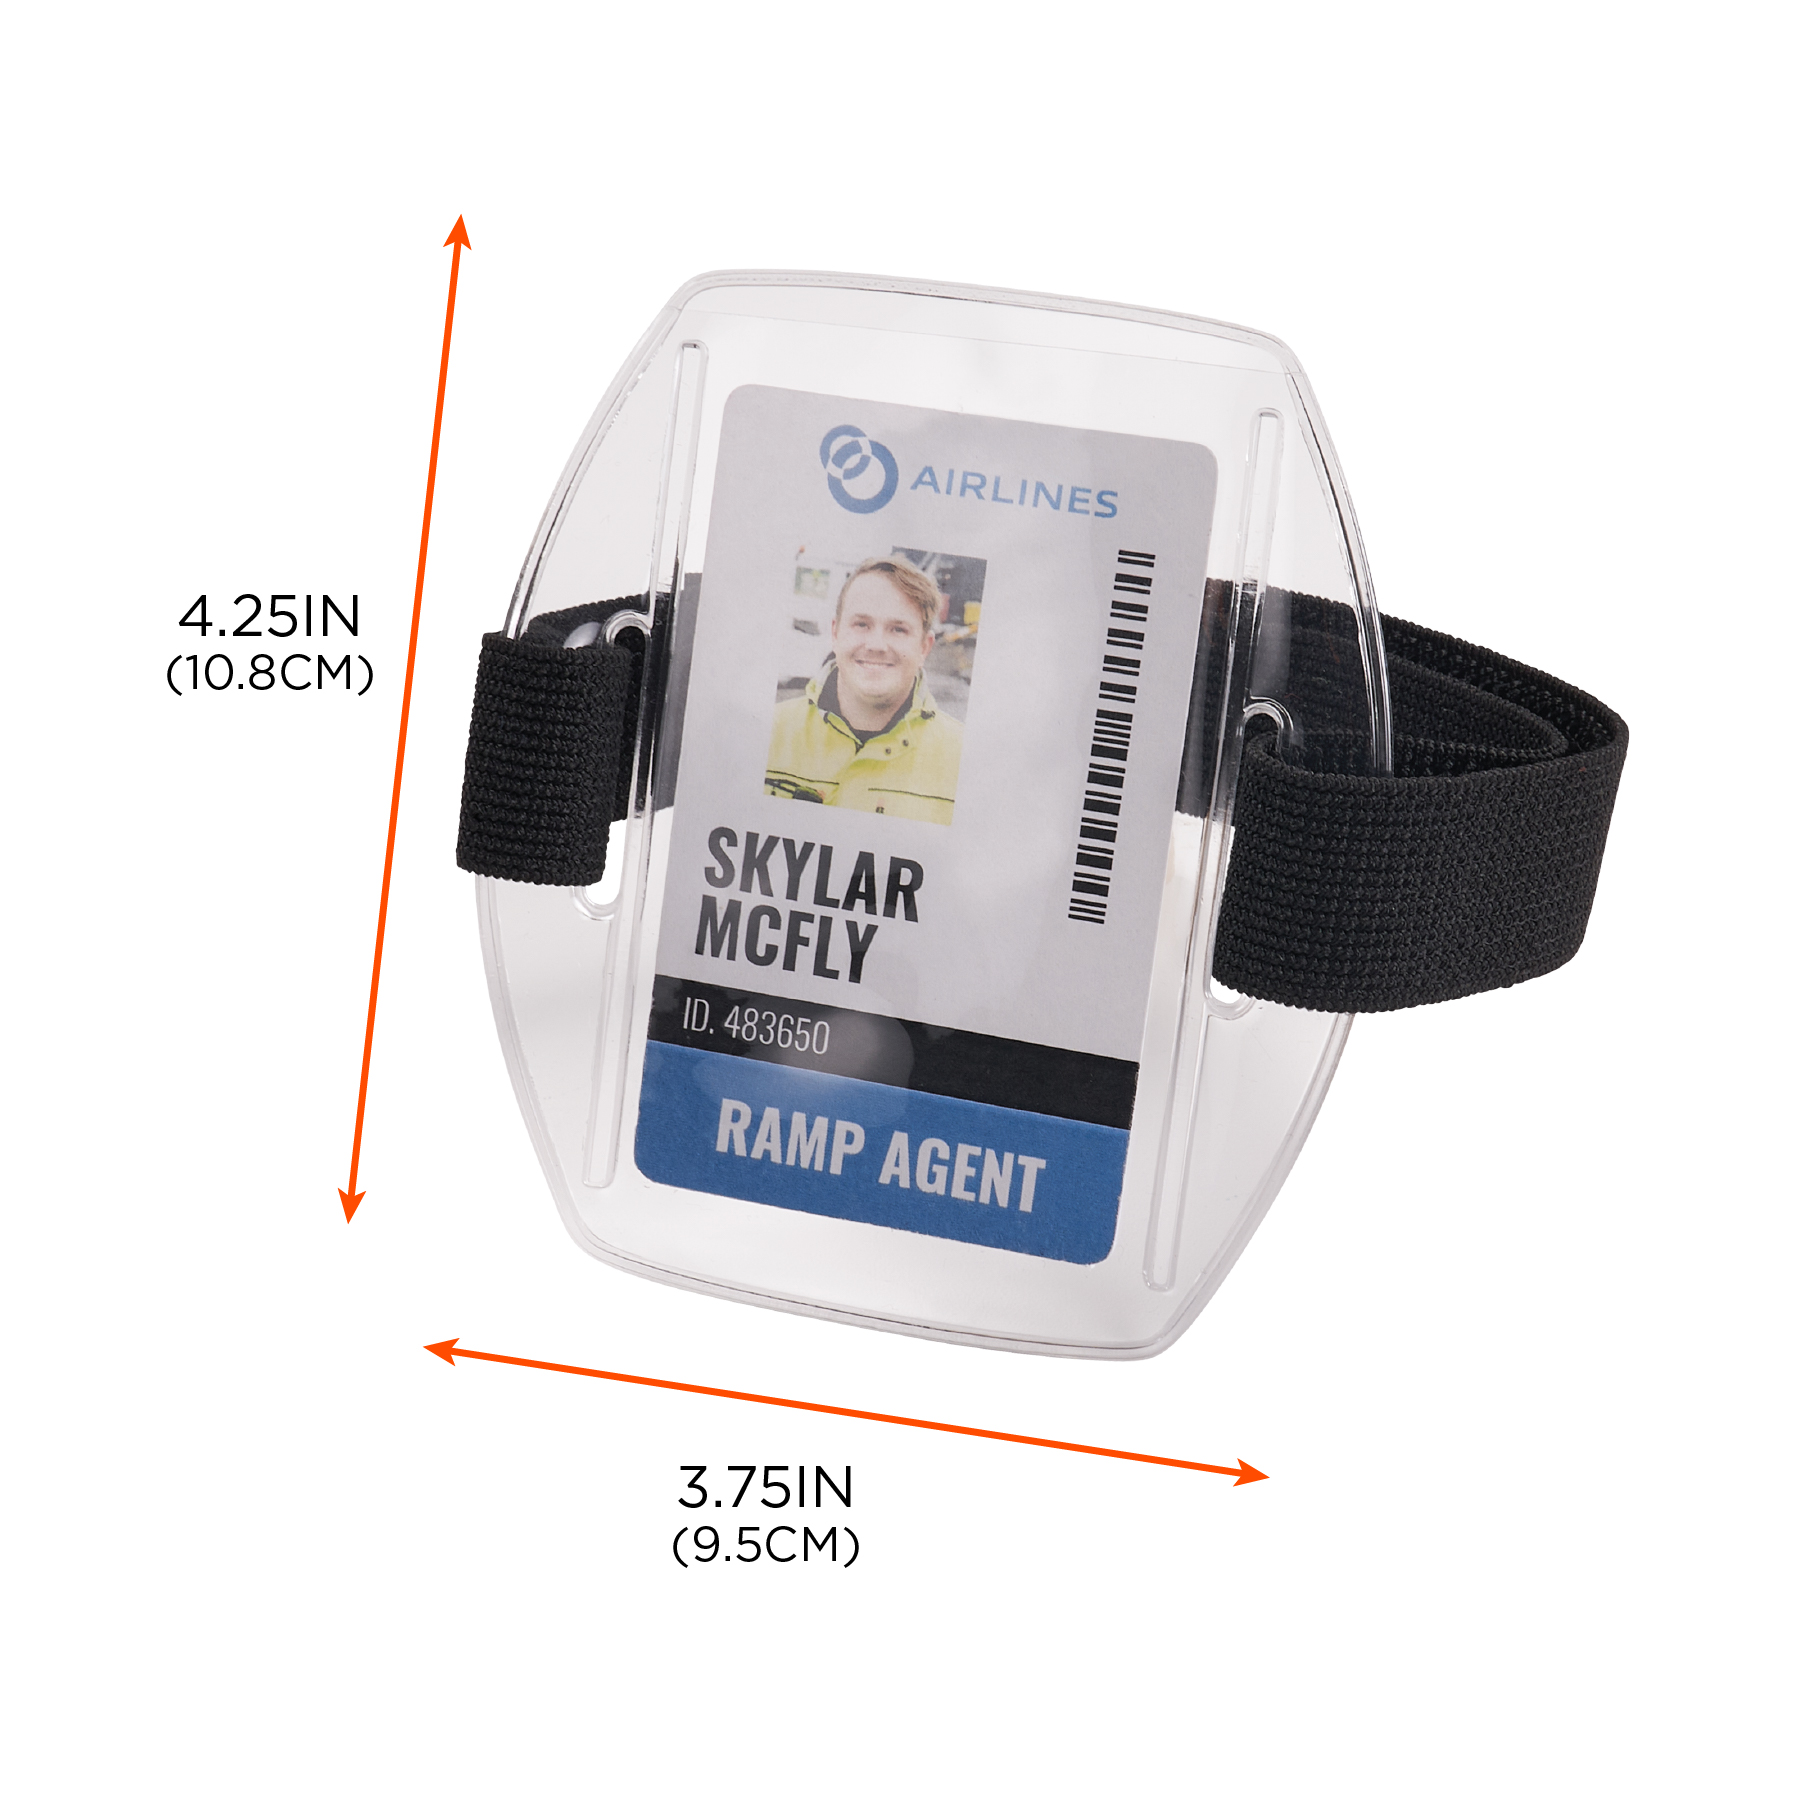 Nurse Badge Holder, Wristlet Keychain, Wrist Lanyard for Keys, Phone,  Wallet, ID Badge and More